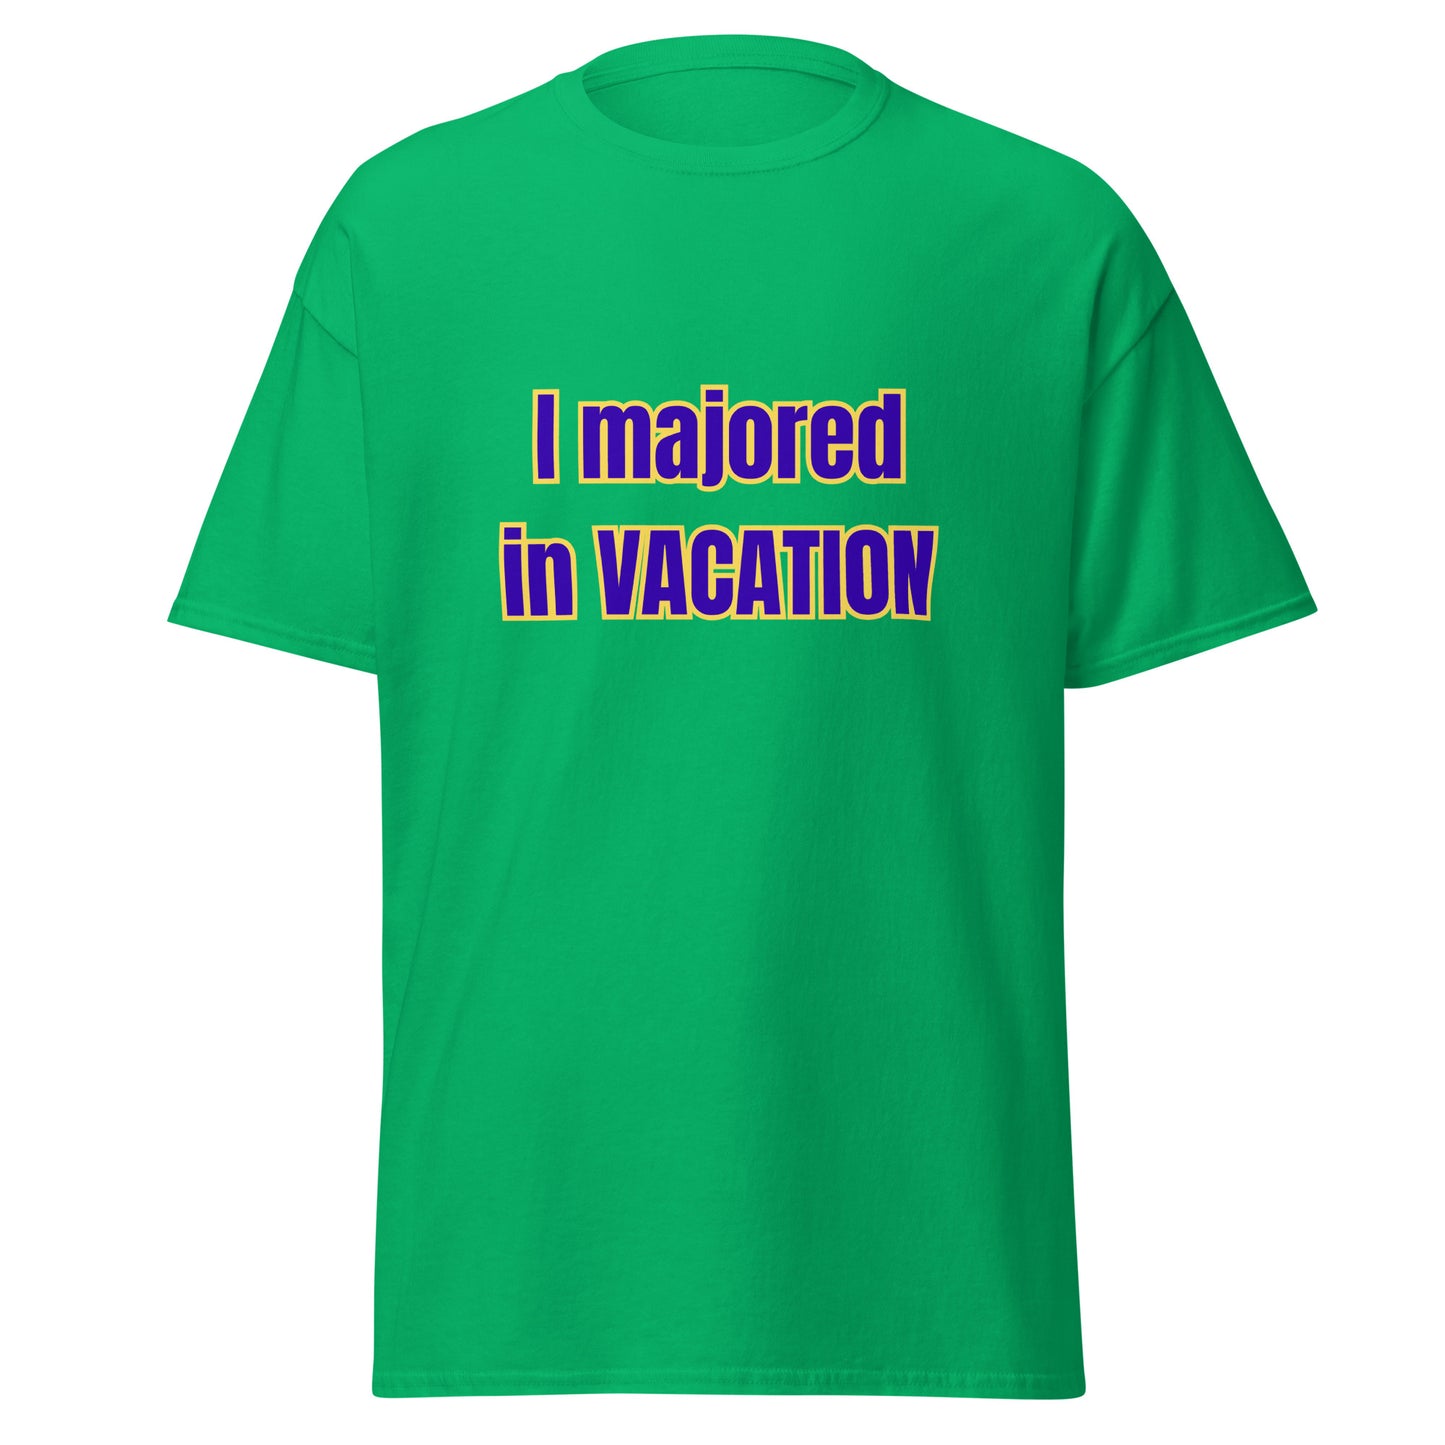 "I majored in Vacation" tee